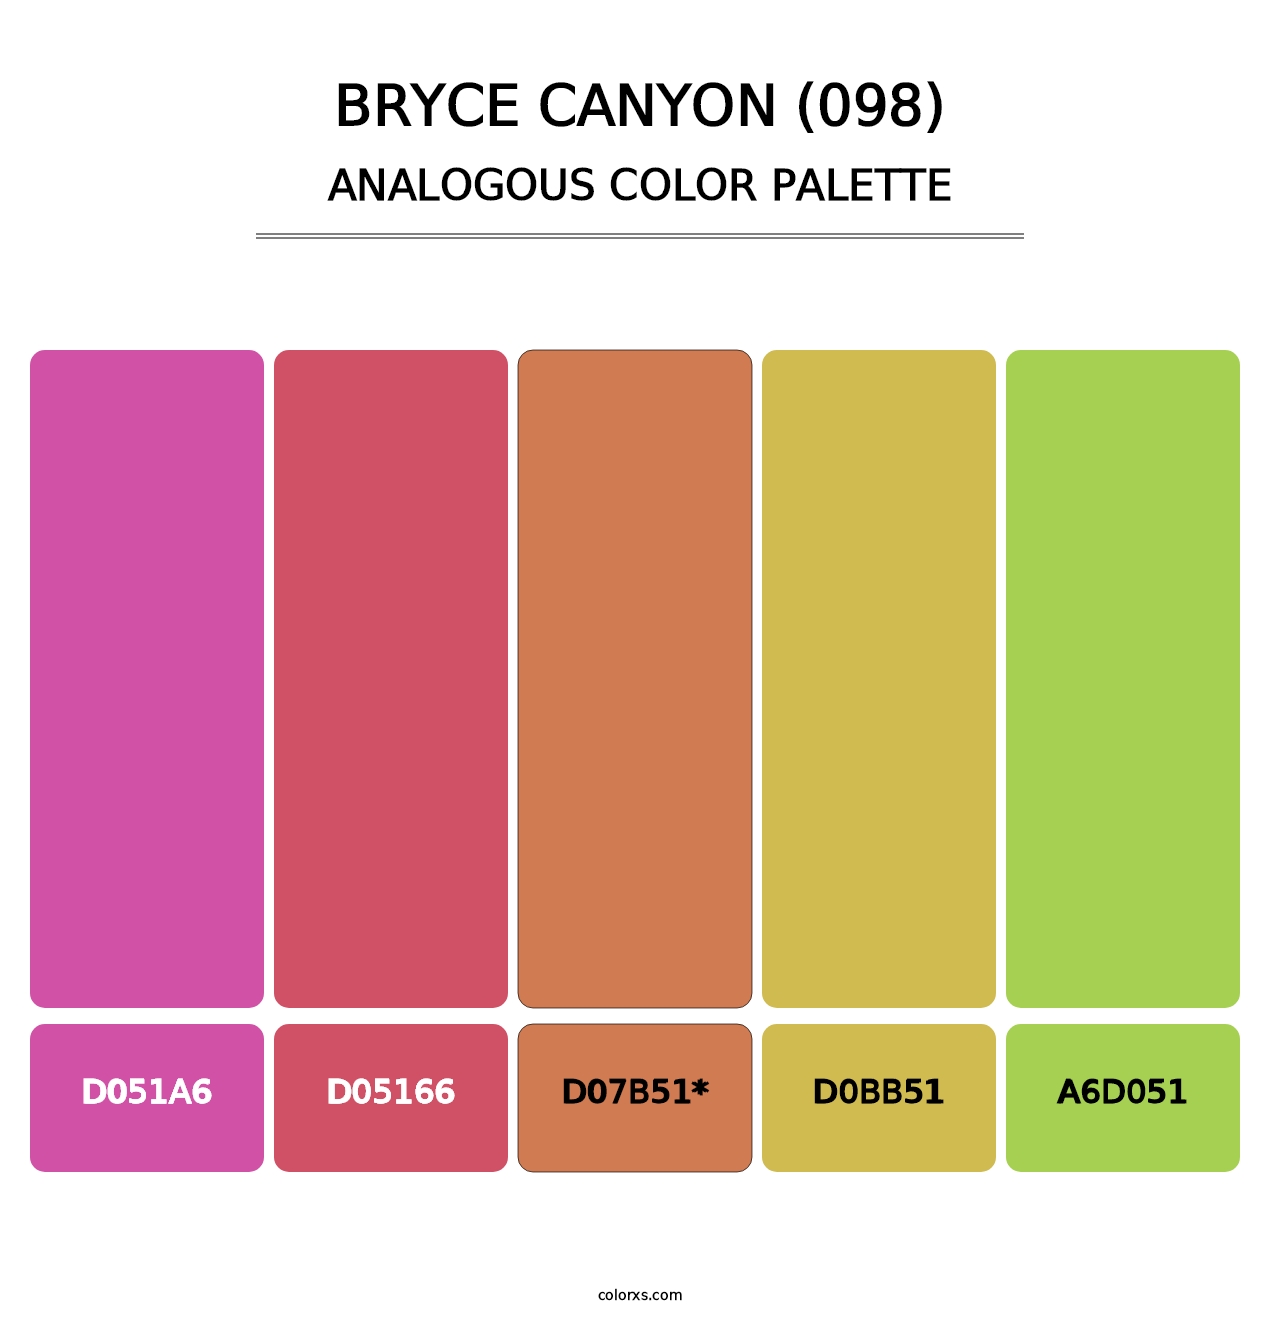 Bryce Canyon (098) - Analogous Color Palette